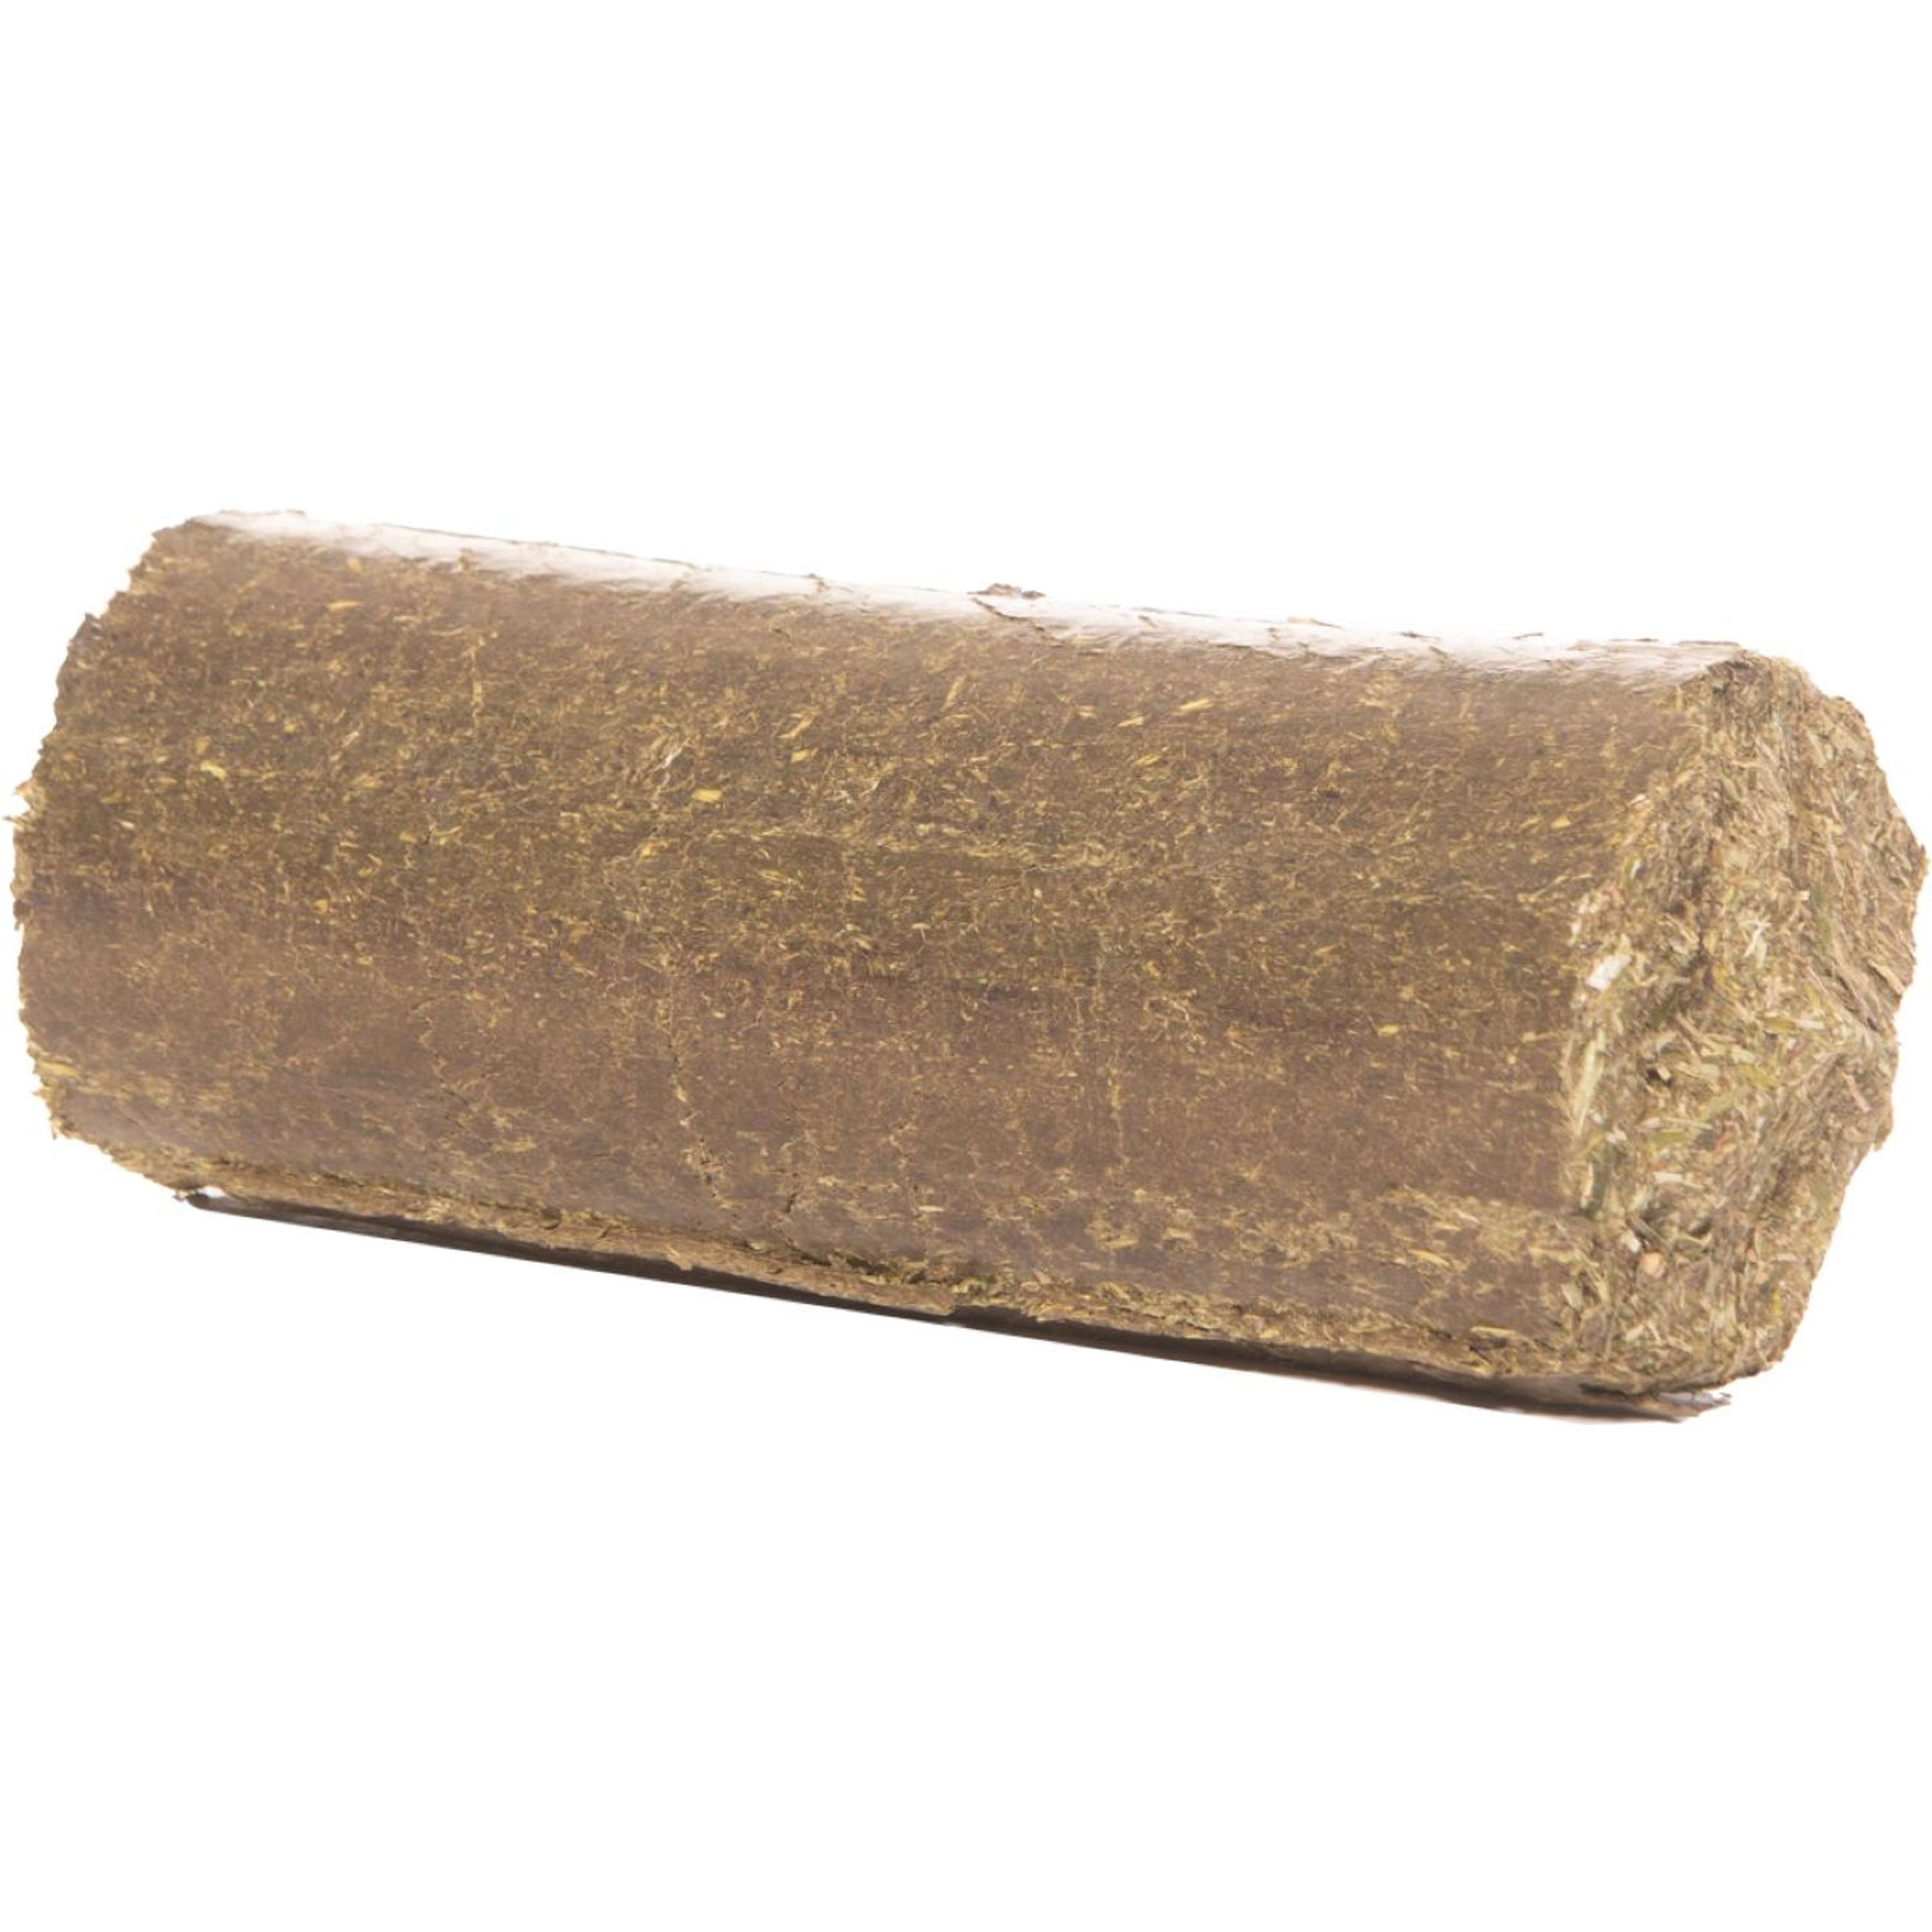 Lax Light Nibble Block Hay/Herbs